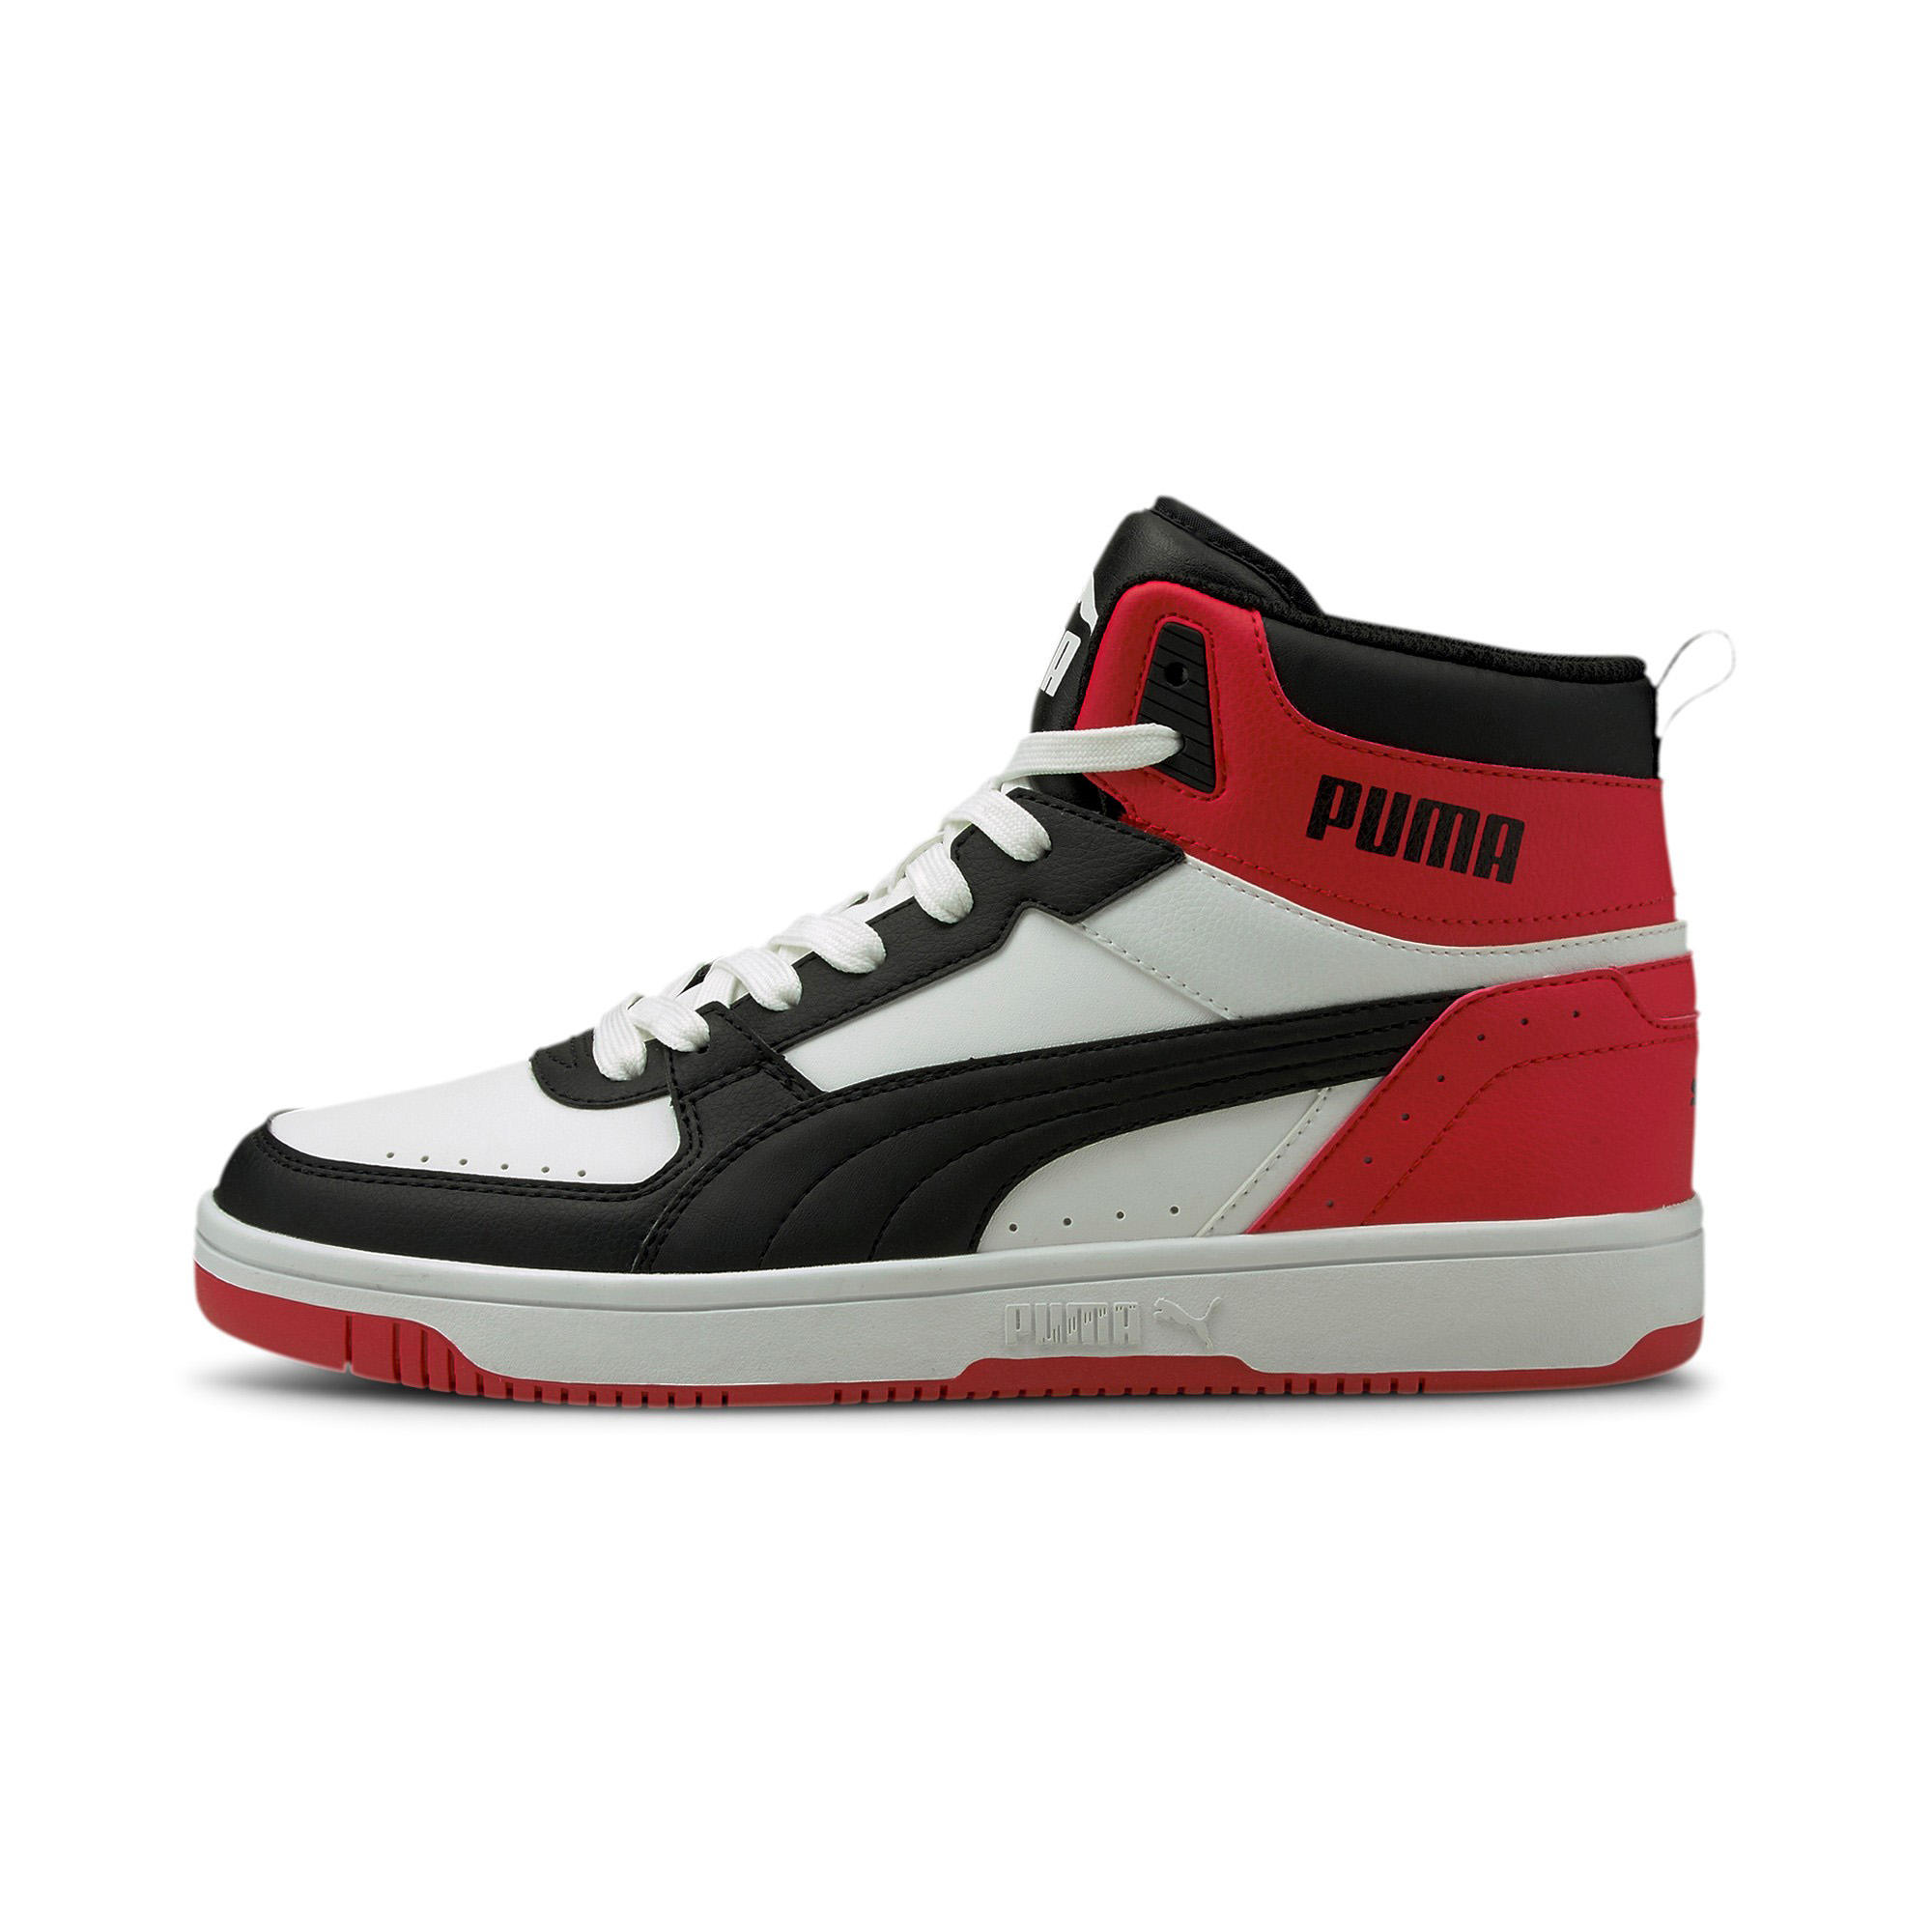 Puma Rebound JOY Hoher Sneaker Stiefel Boots Herren Sneaker 374765 03